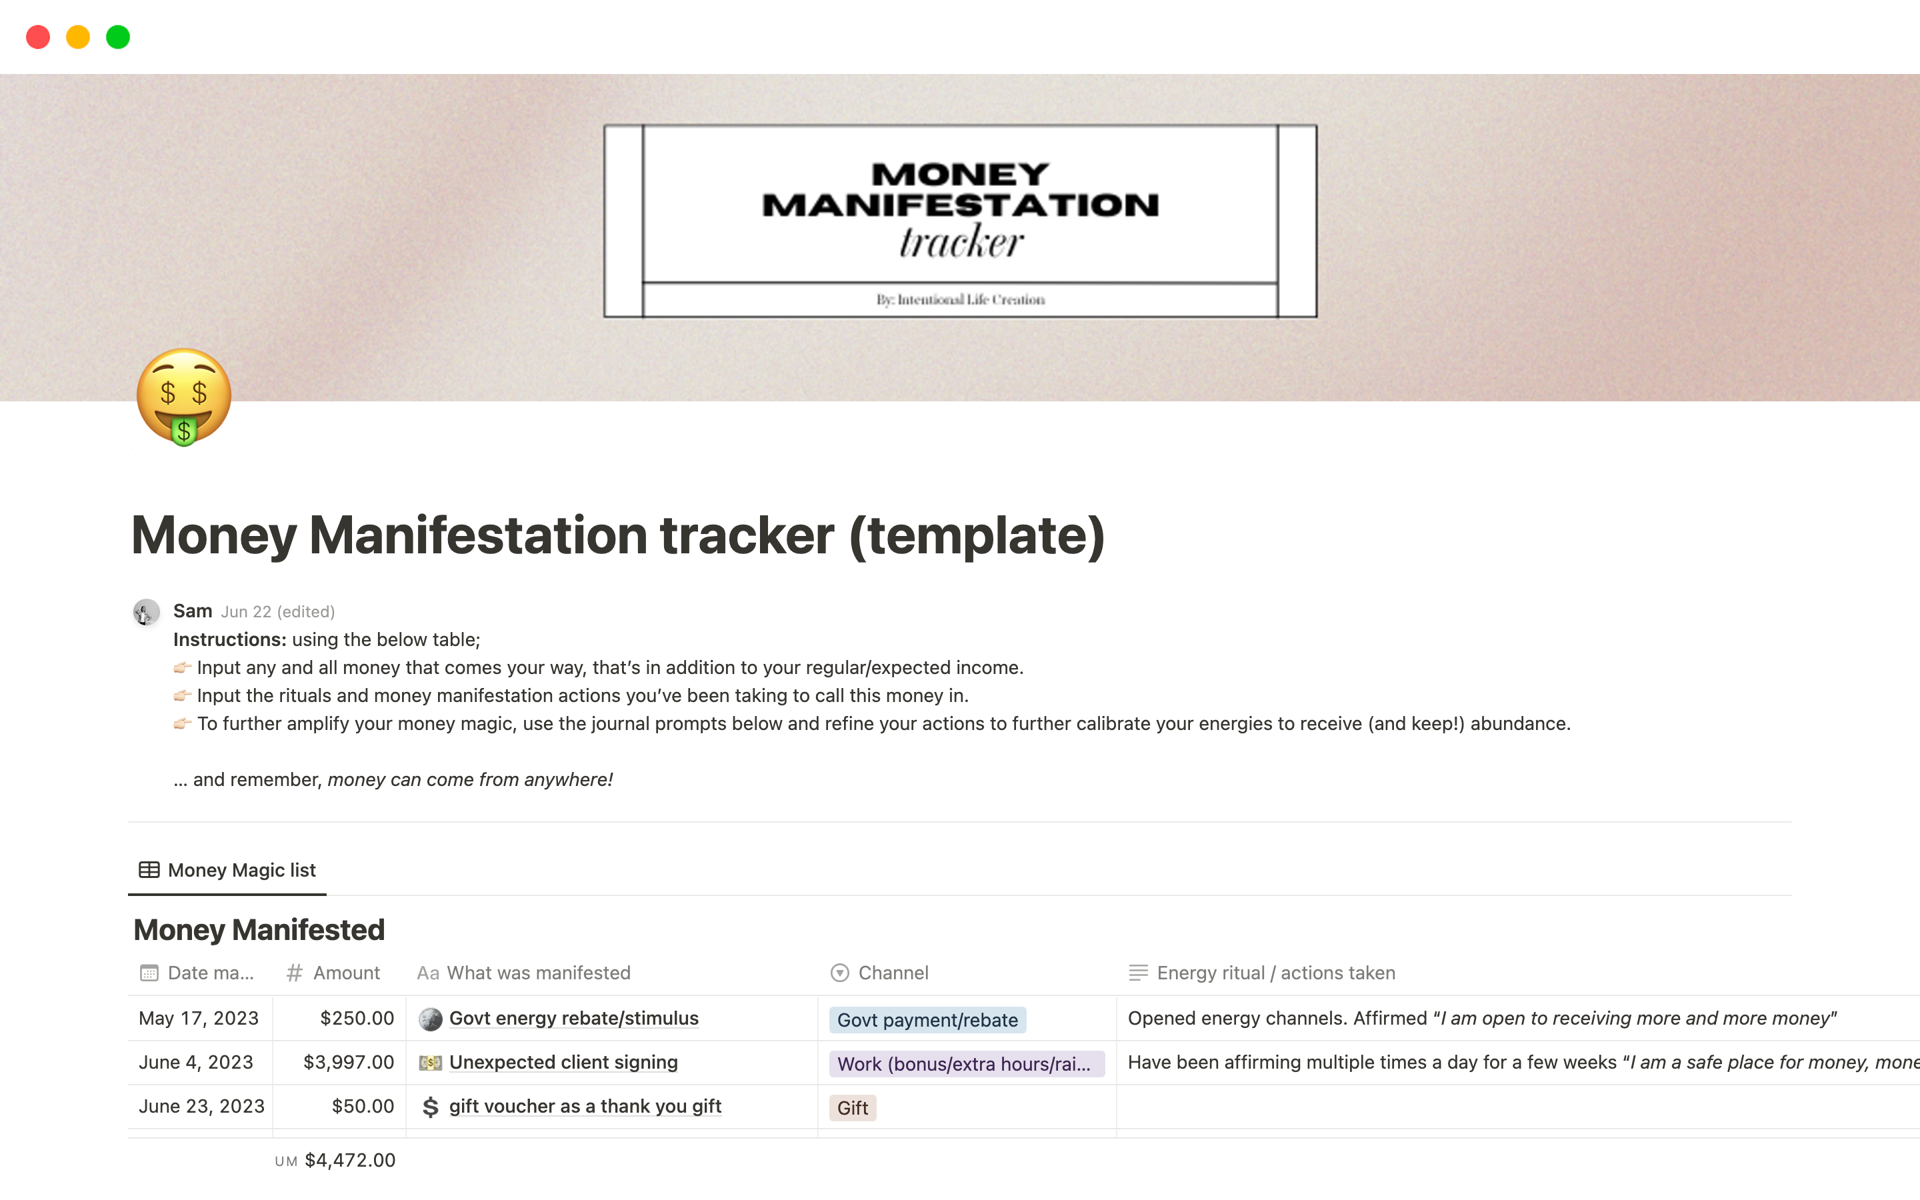 Aperçu du modèle de Money Manifestation tracker (template)